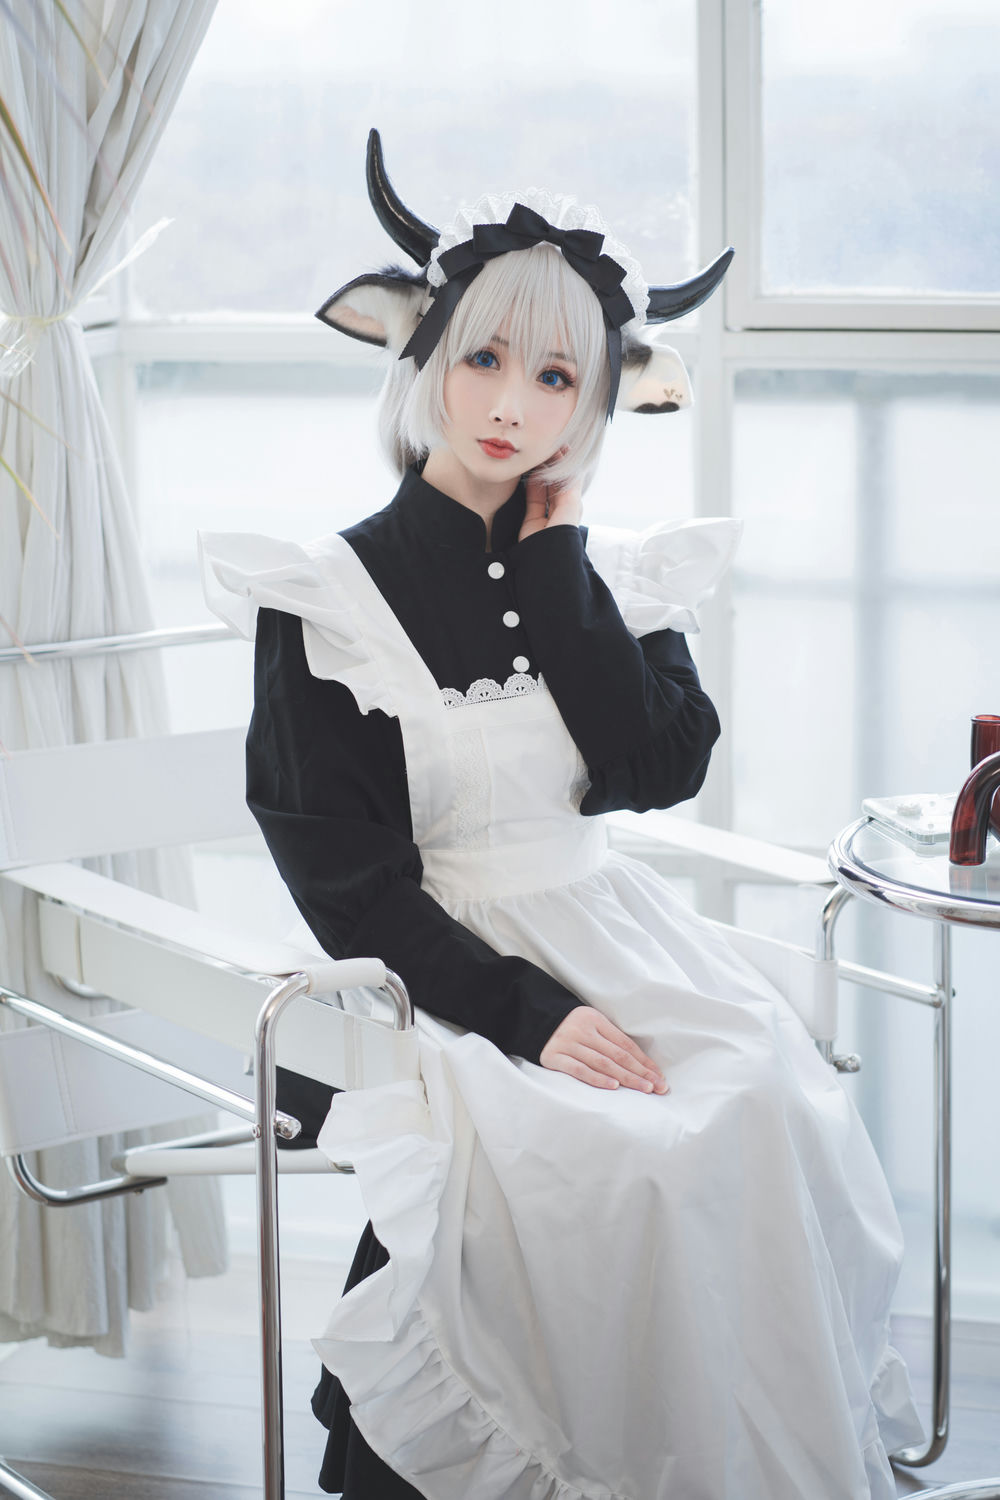 rioko凉凉子 - 贴心的牛奶女仆 [45P-465MB] - 第1张 - 机器猫次元